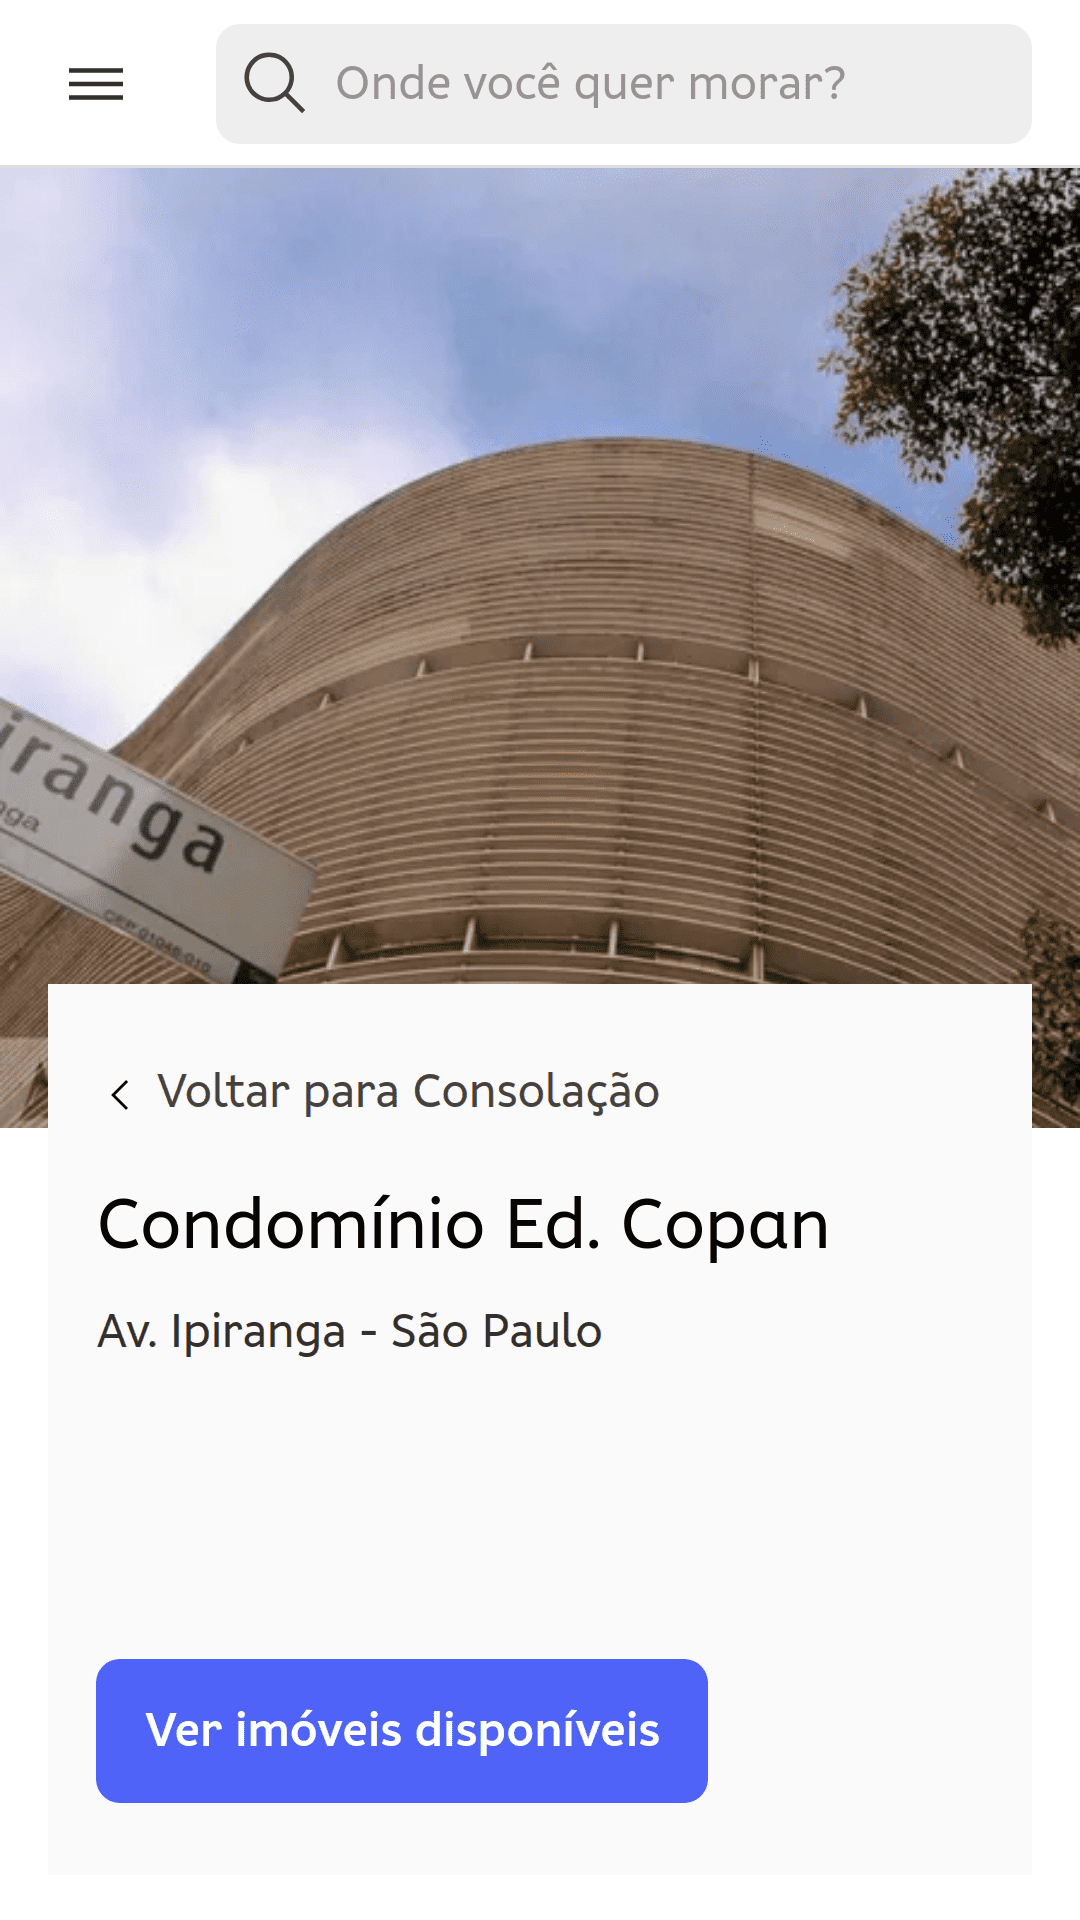 Halaman kondominium untuk Edifício Copan (São Paulo, Brasil). Foto yang diambil dari permukaan tanah menunjukkan lekukan struktur bangunan.